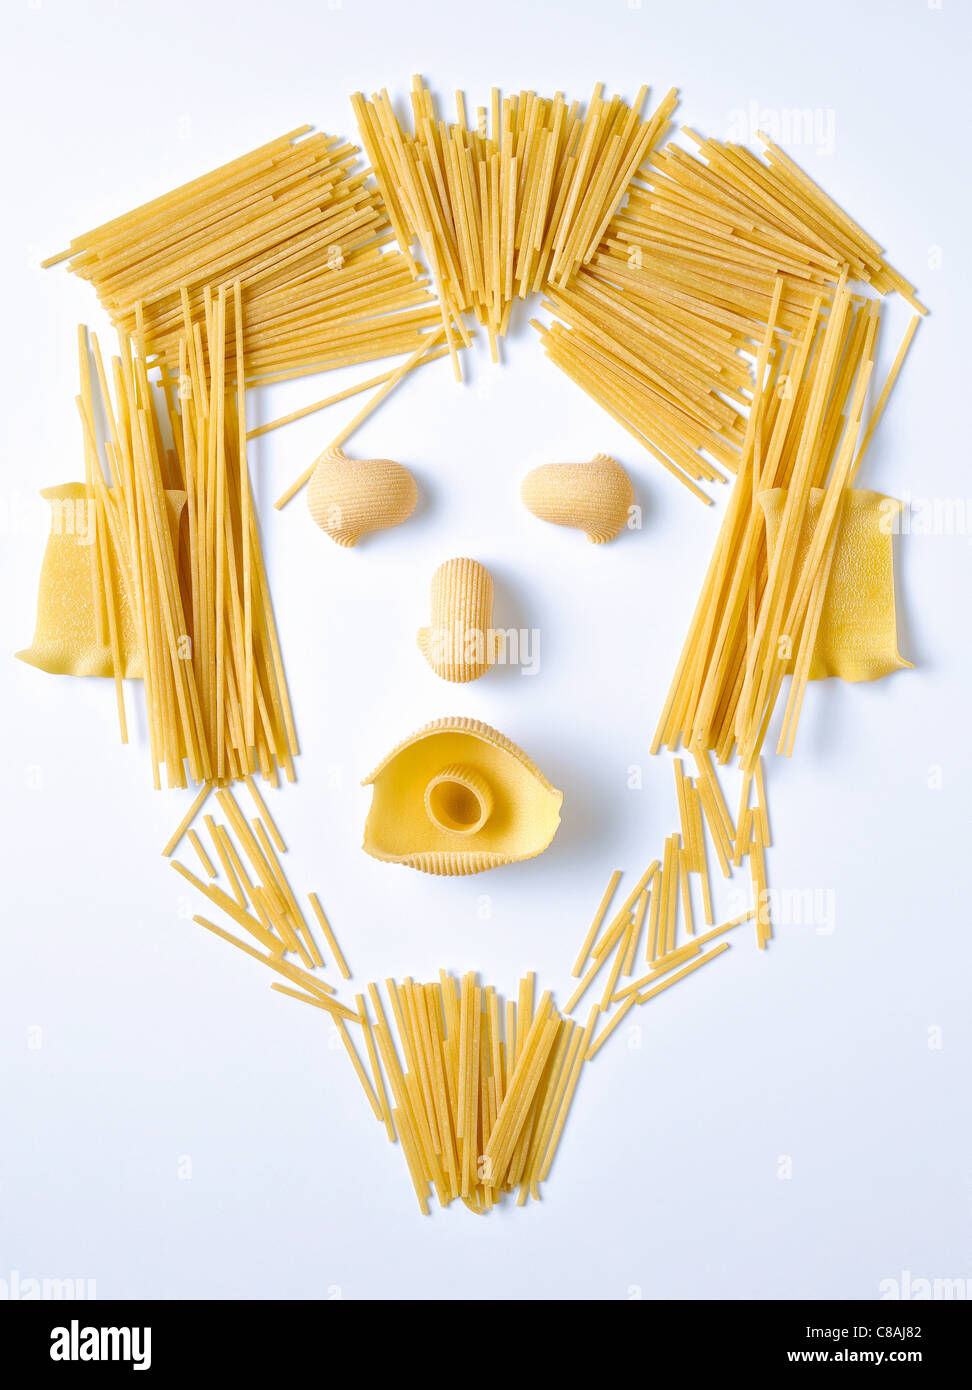 https://c8.alamy.com/comp/C8AJ82/pasta-and-spaghettis-in-the-shape-of-a-face-C8AJ82.jpg